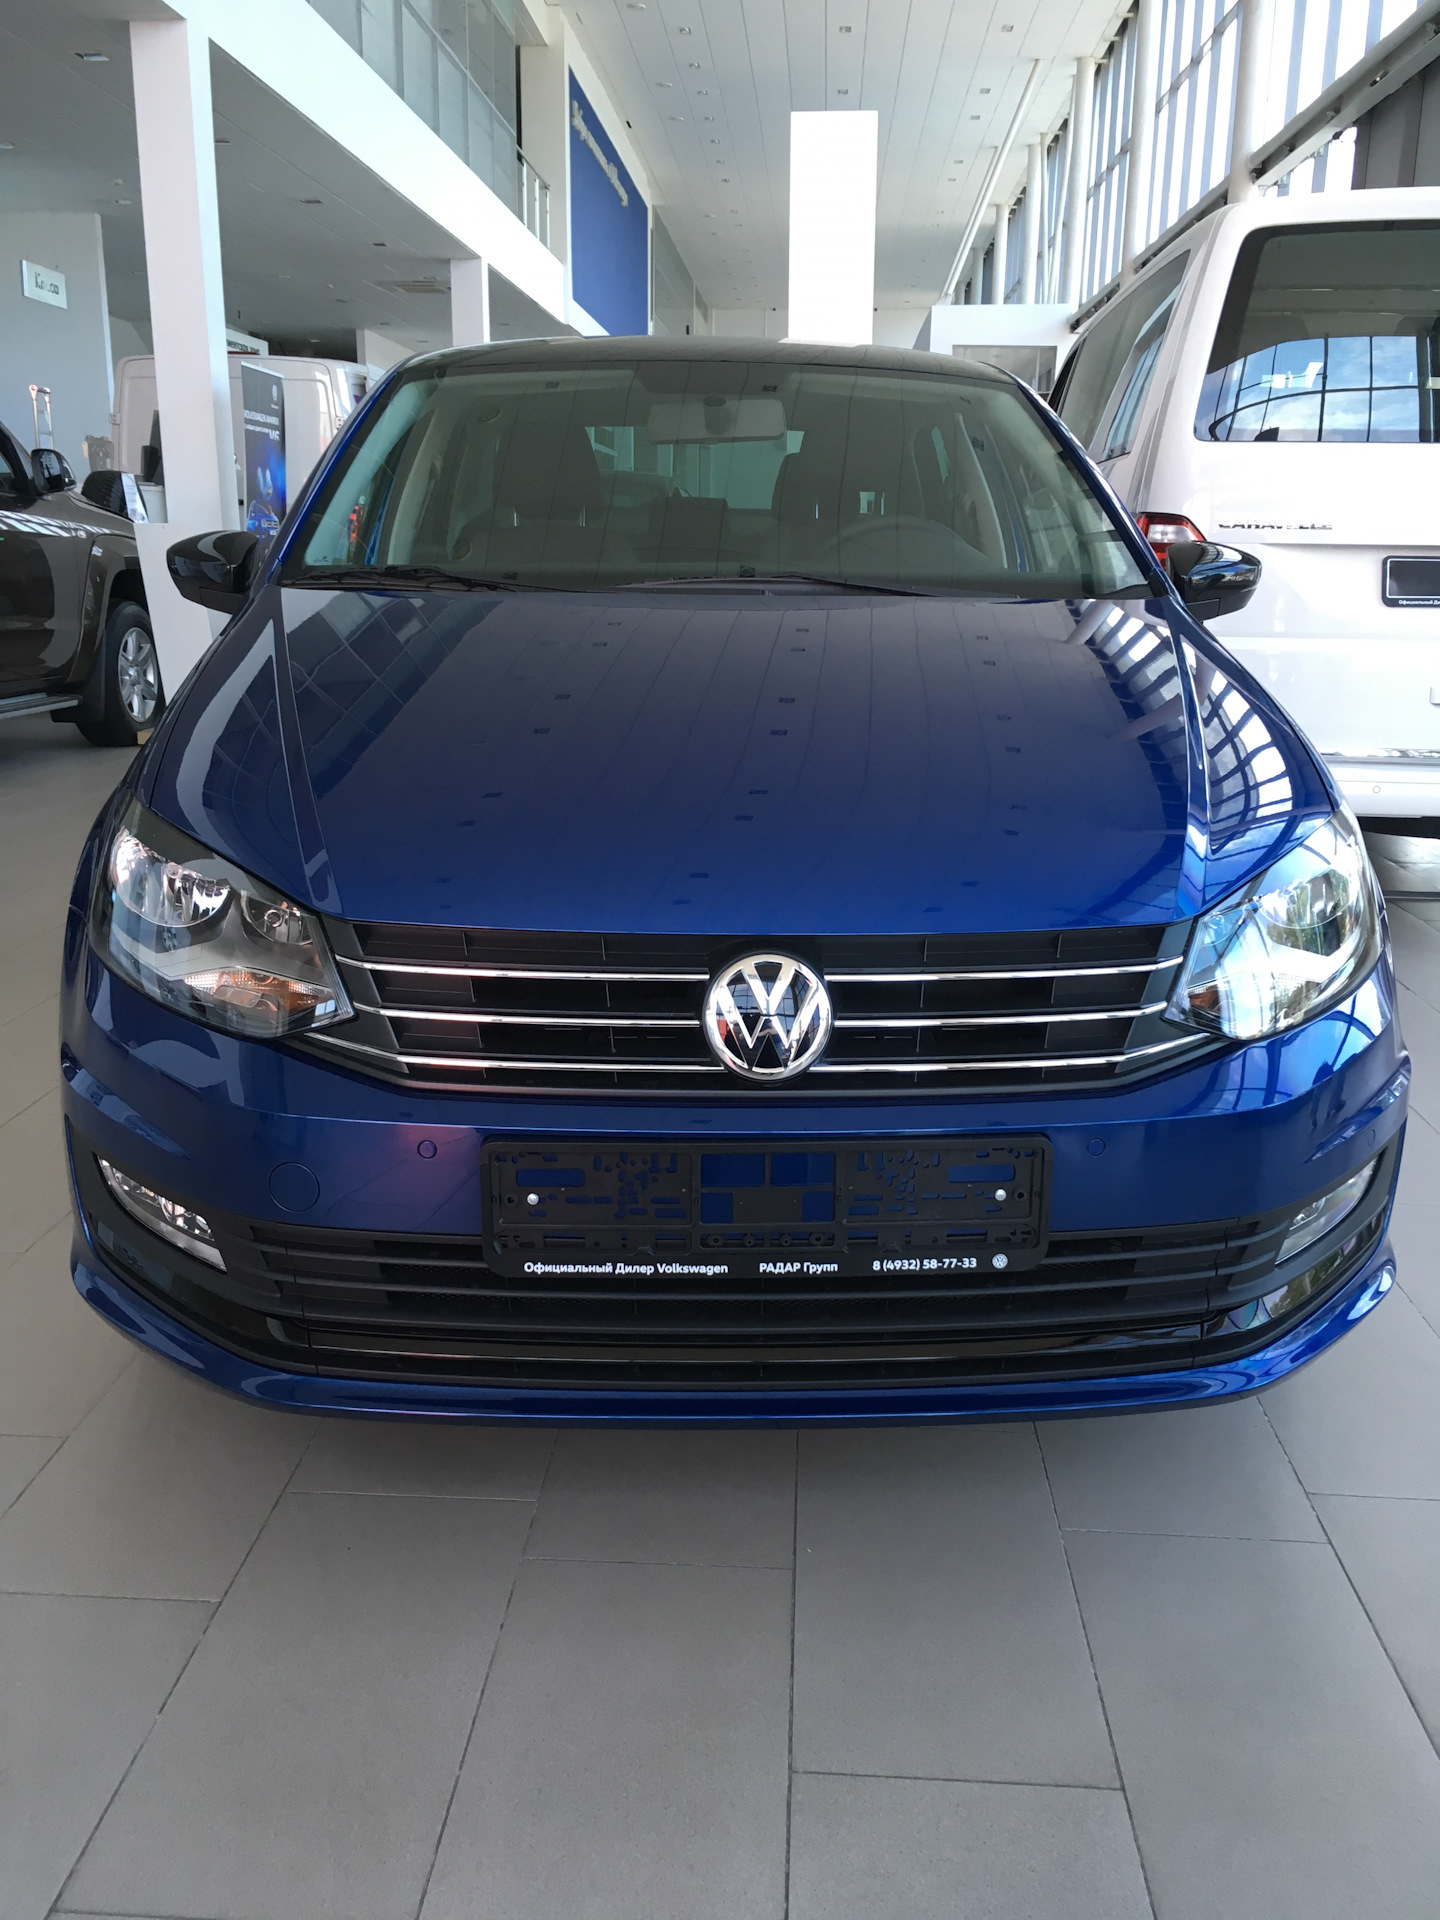 Volkswagen синий. Feef Blue поло Фольксваген. Volkswagen Polo синий Reef. Volkswagen Polo синий Reef металлик. Volkswagen Polo sedan Night Blue (2010).